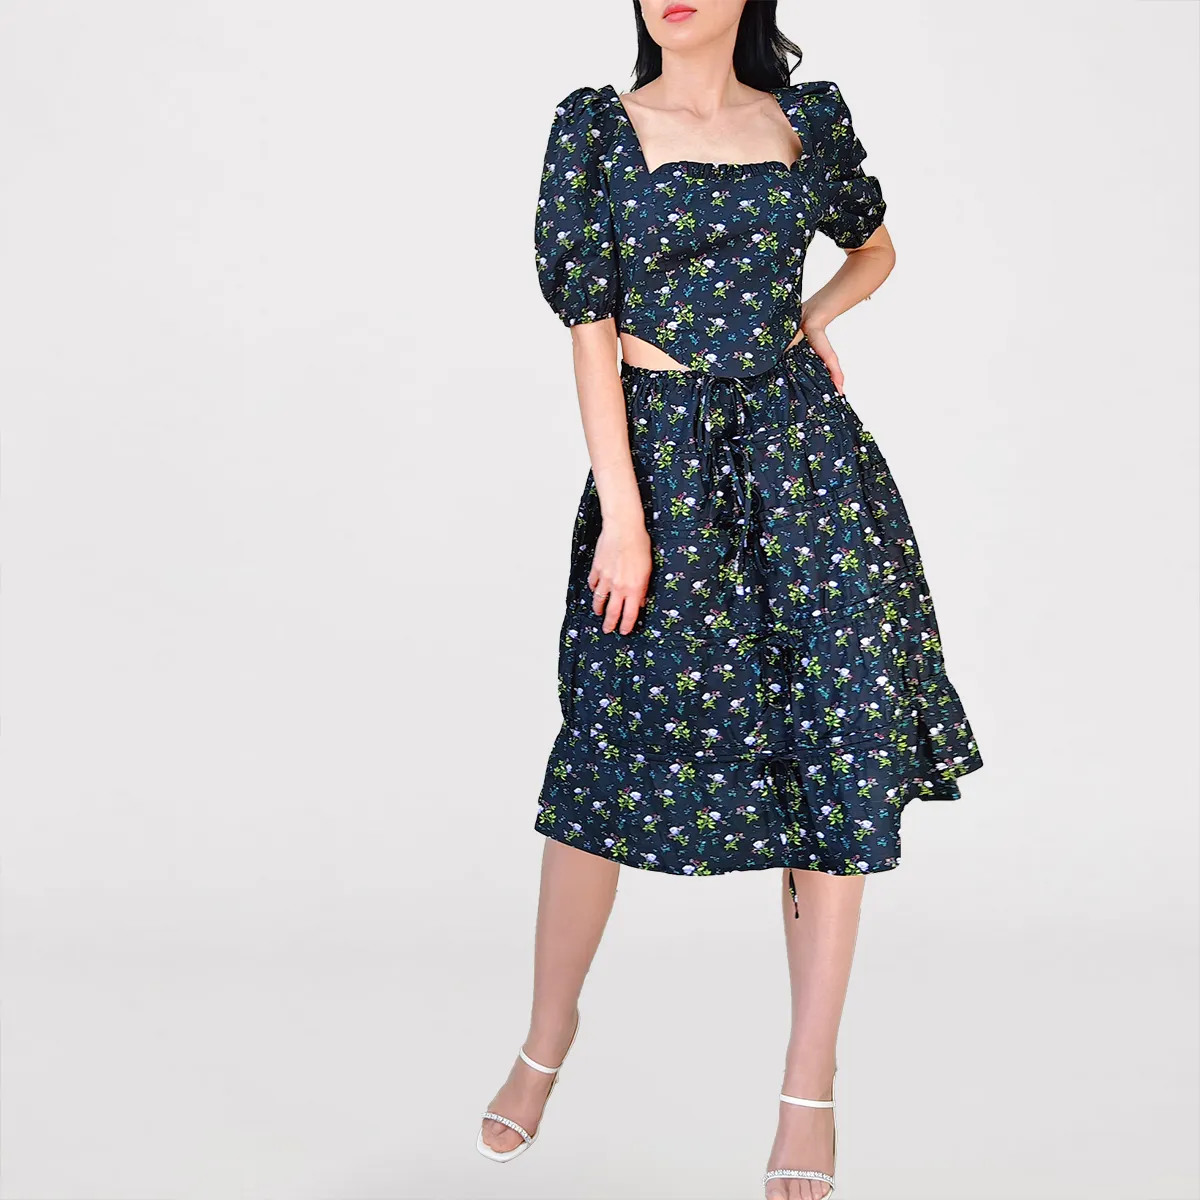 Gaun lipit punggung terbuka lengan pendek wanita, gaun hitam motif bunga musim gugur dua potong rok dan atasan tube untuk wanita